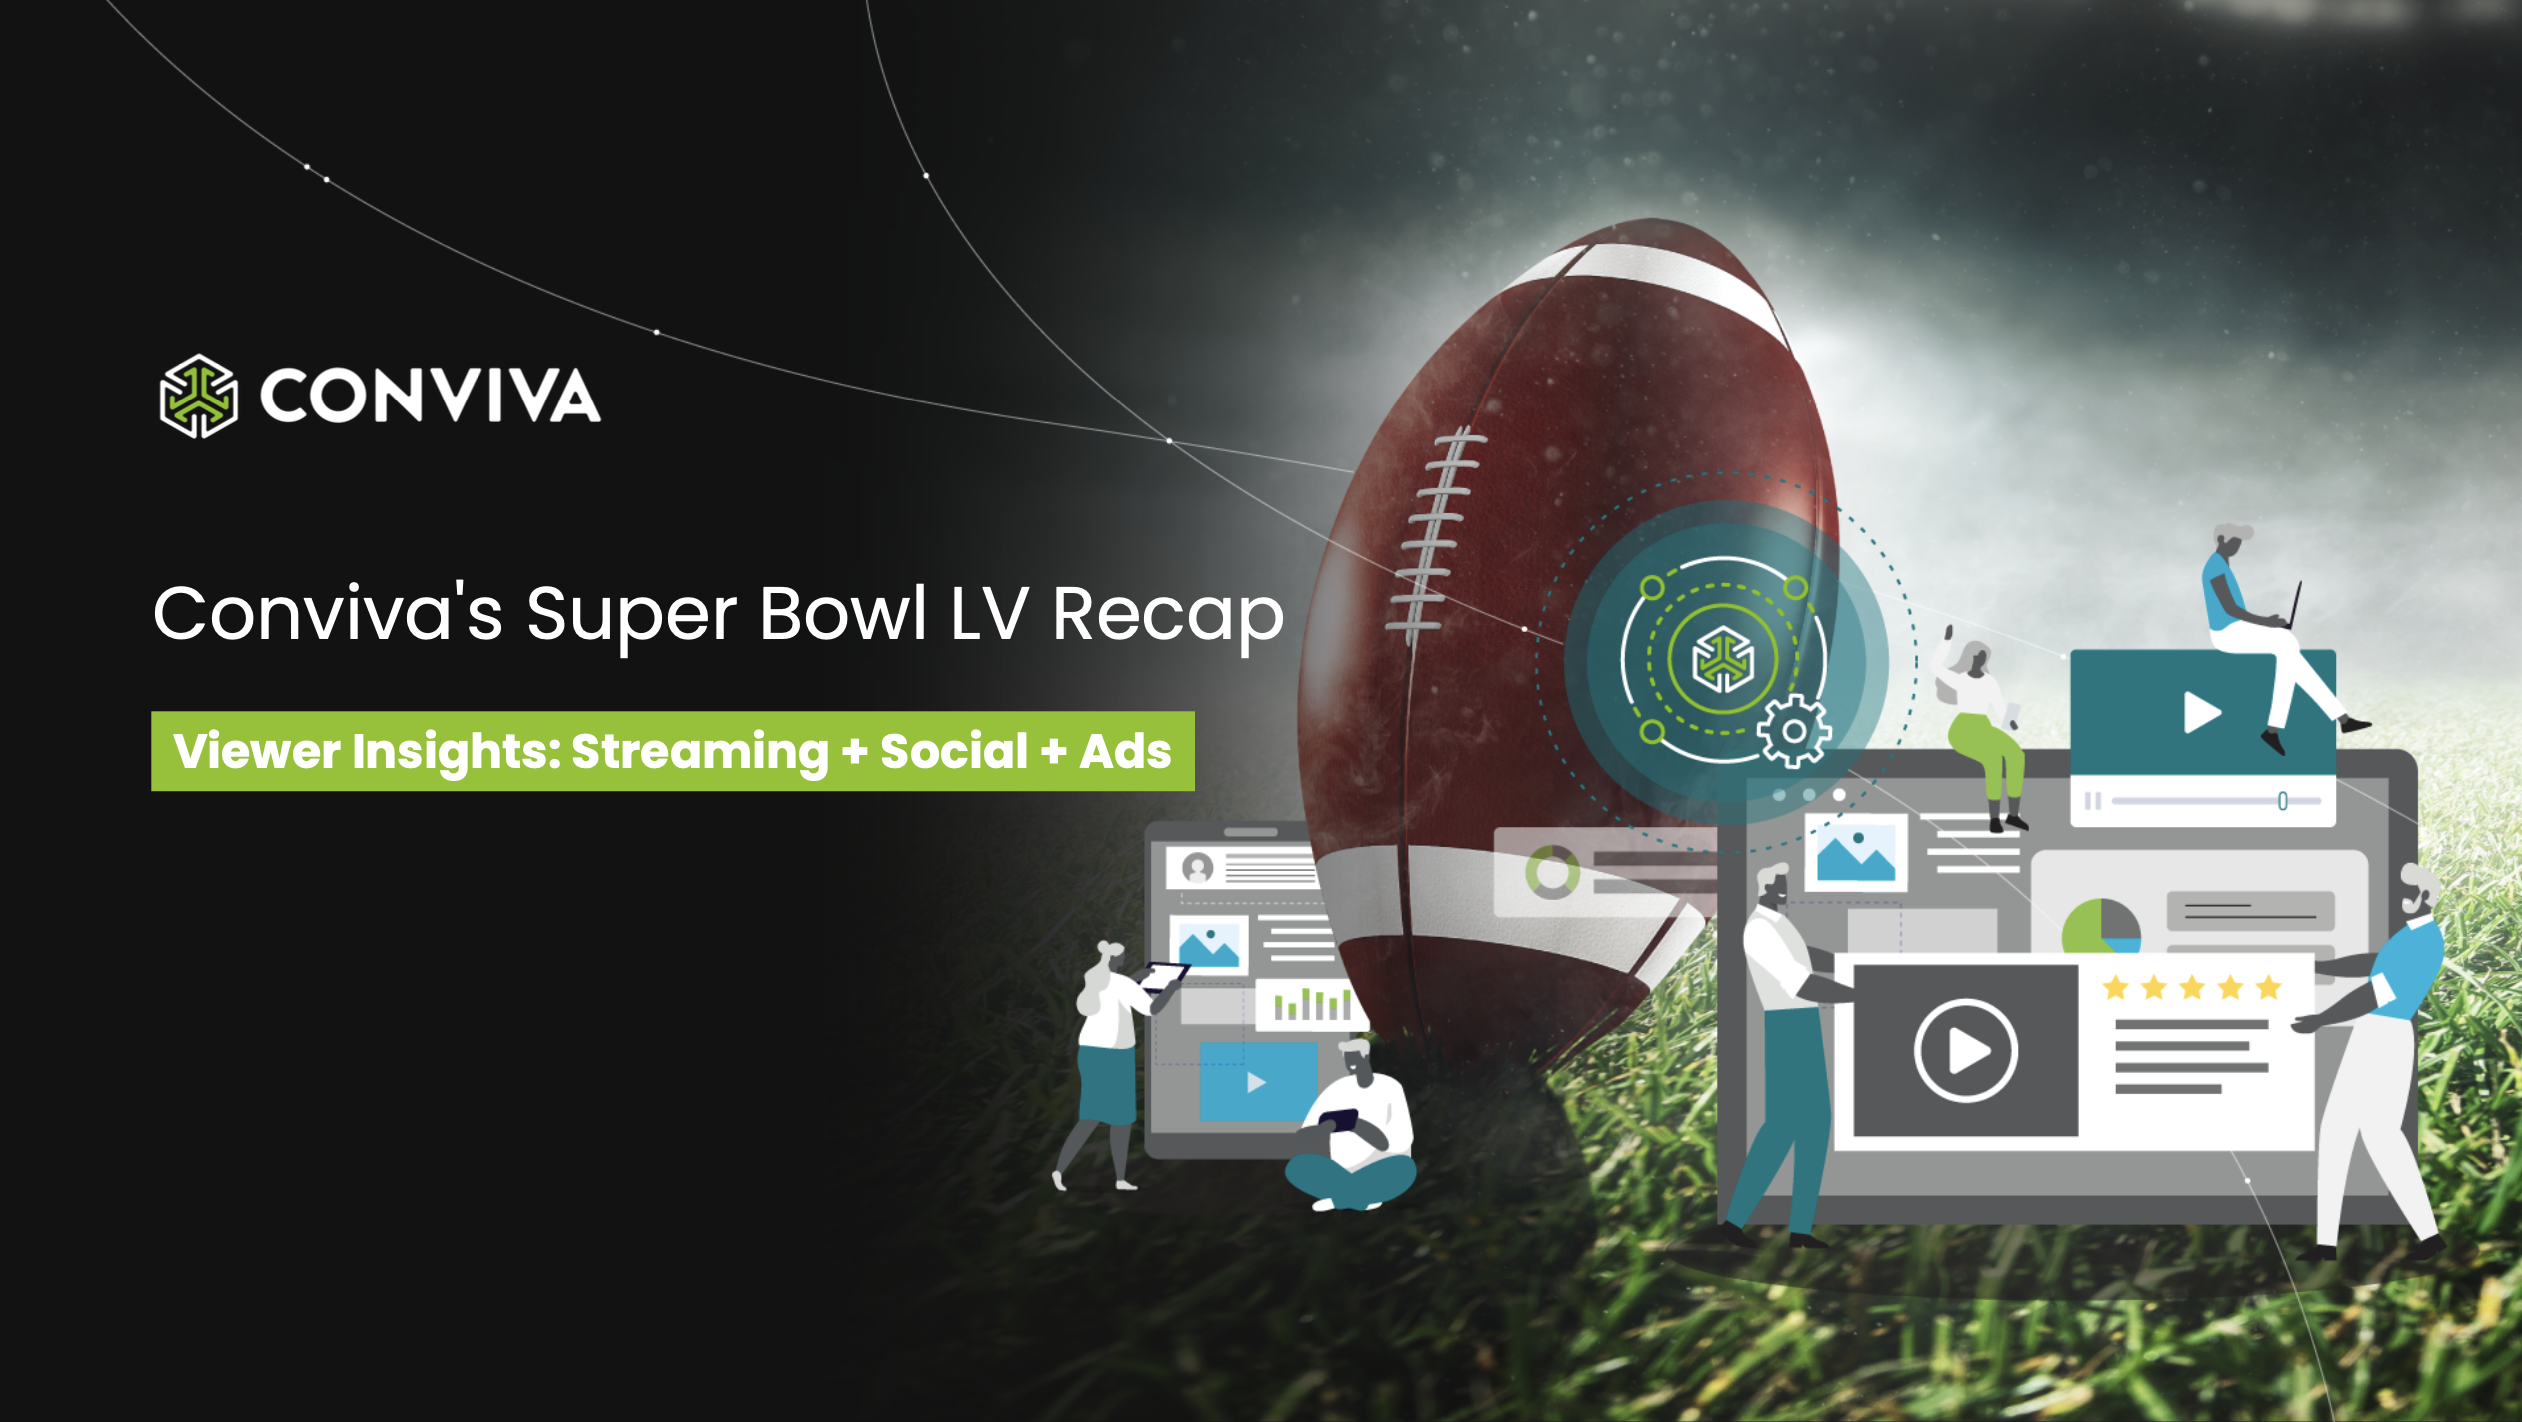 Conviva's Super Bowl LV Recap